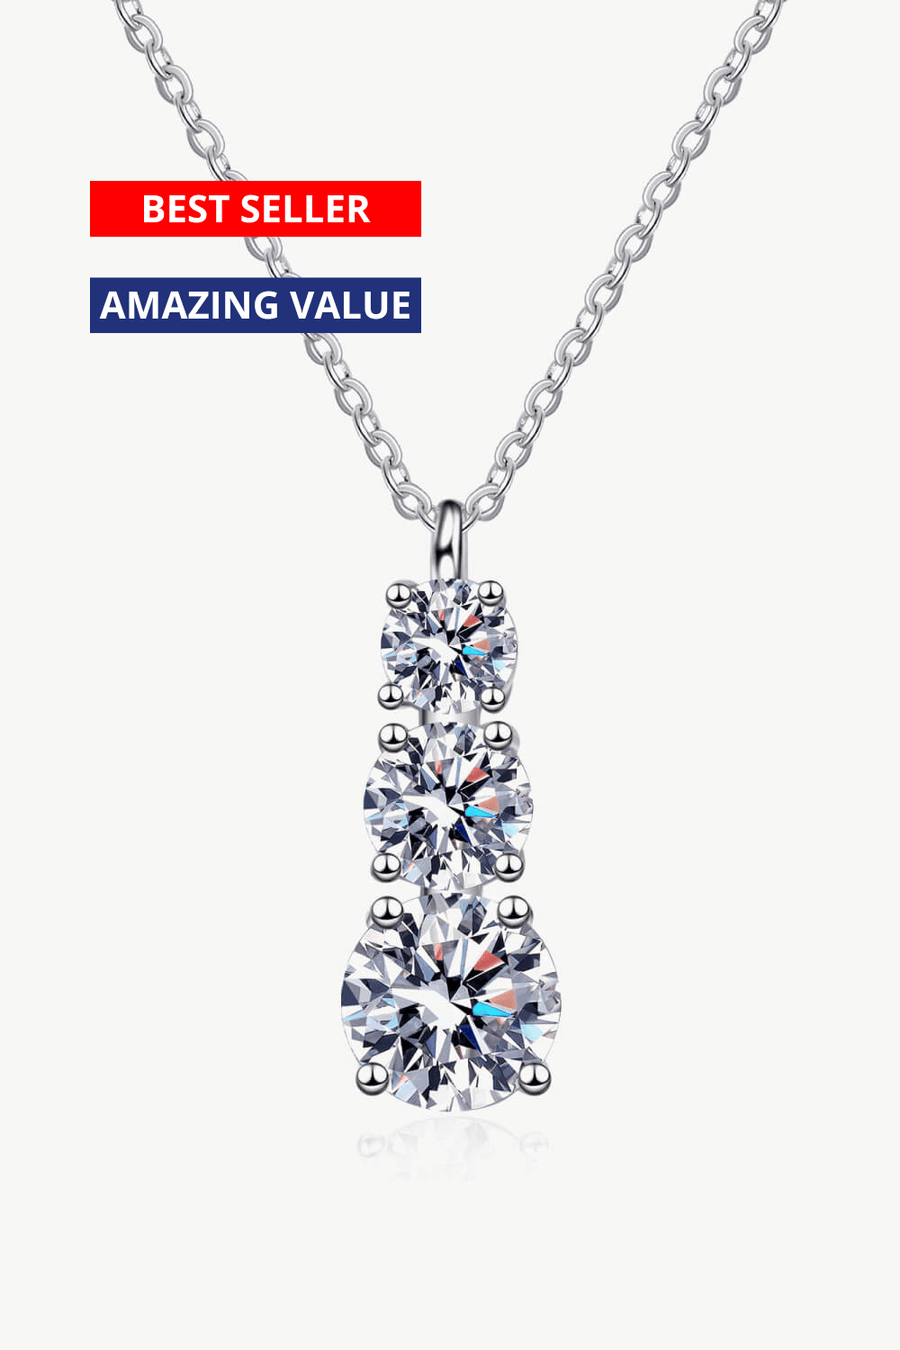 1# BEST Best Diamond Necklace Jewelry Gifts for Women | #1 Best Most Top Trendy Trending 1.8 Carat Diamond Triple-Pendant Necklace Gift for Women, Ladies | MASON New York